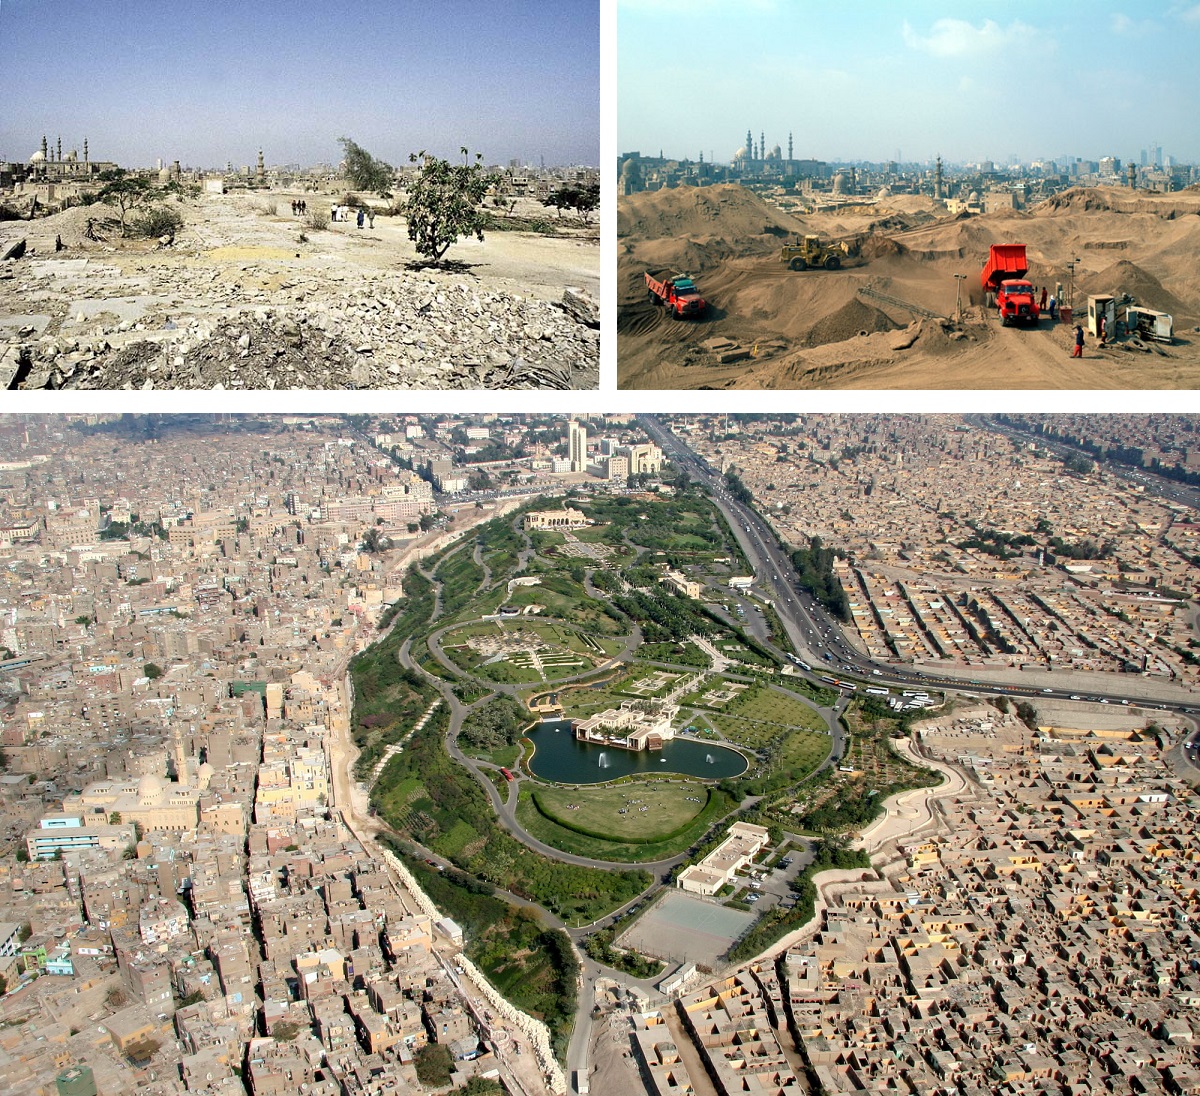 Al Azar Park and its transformation - a vision of the Aga Khan